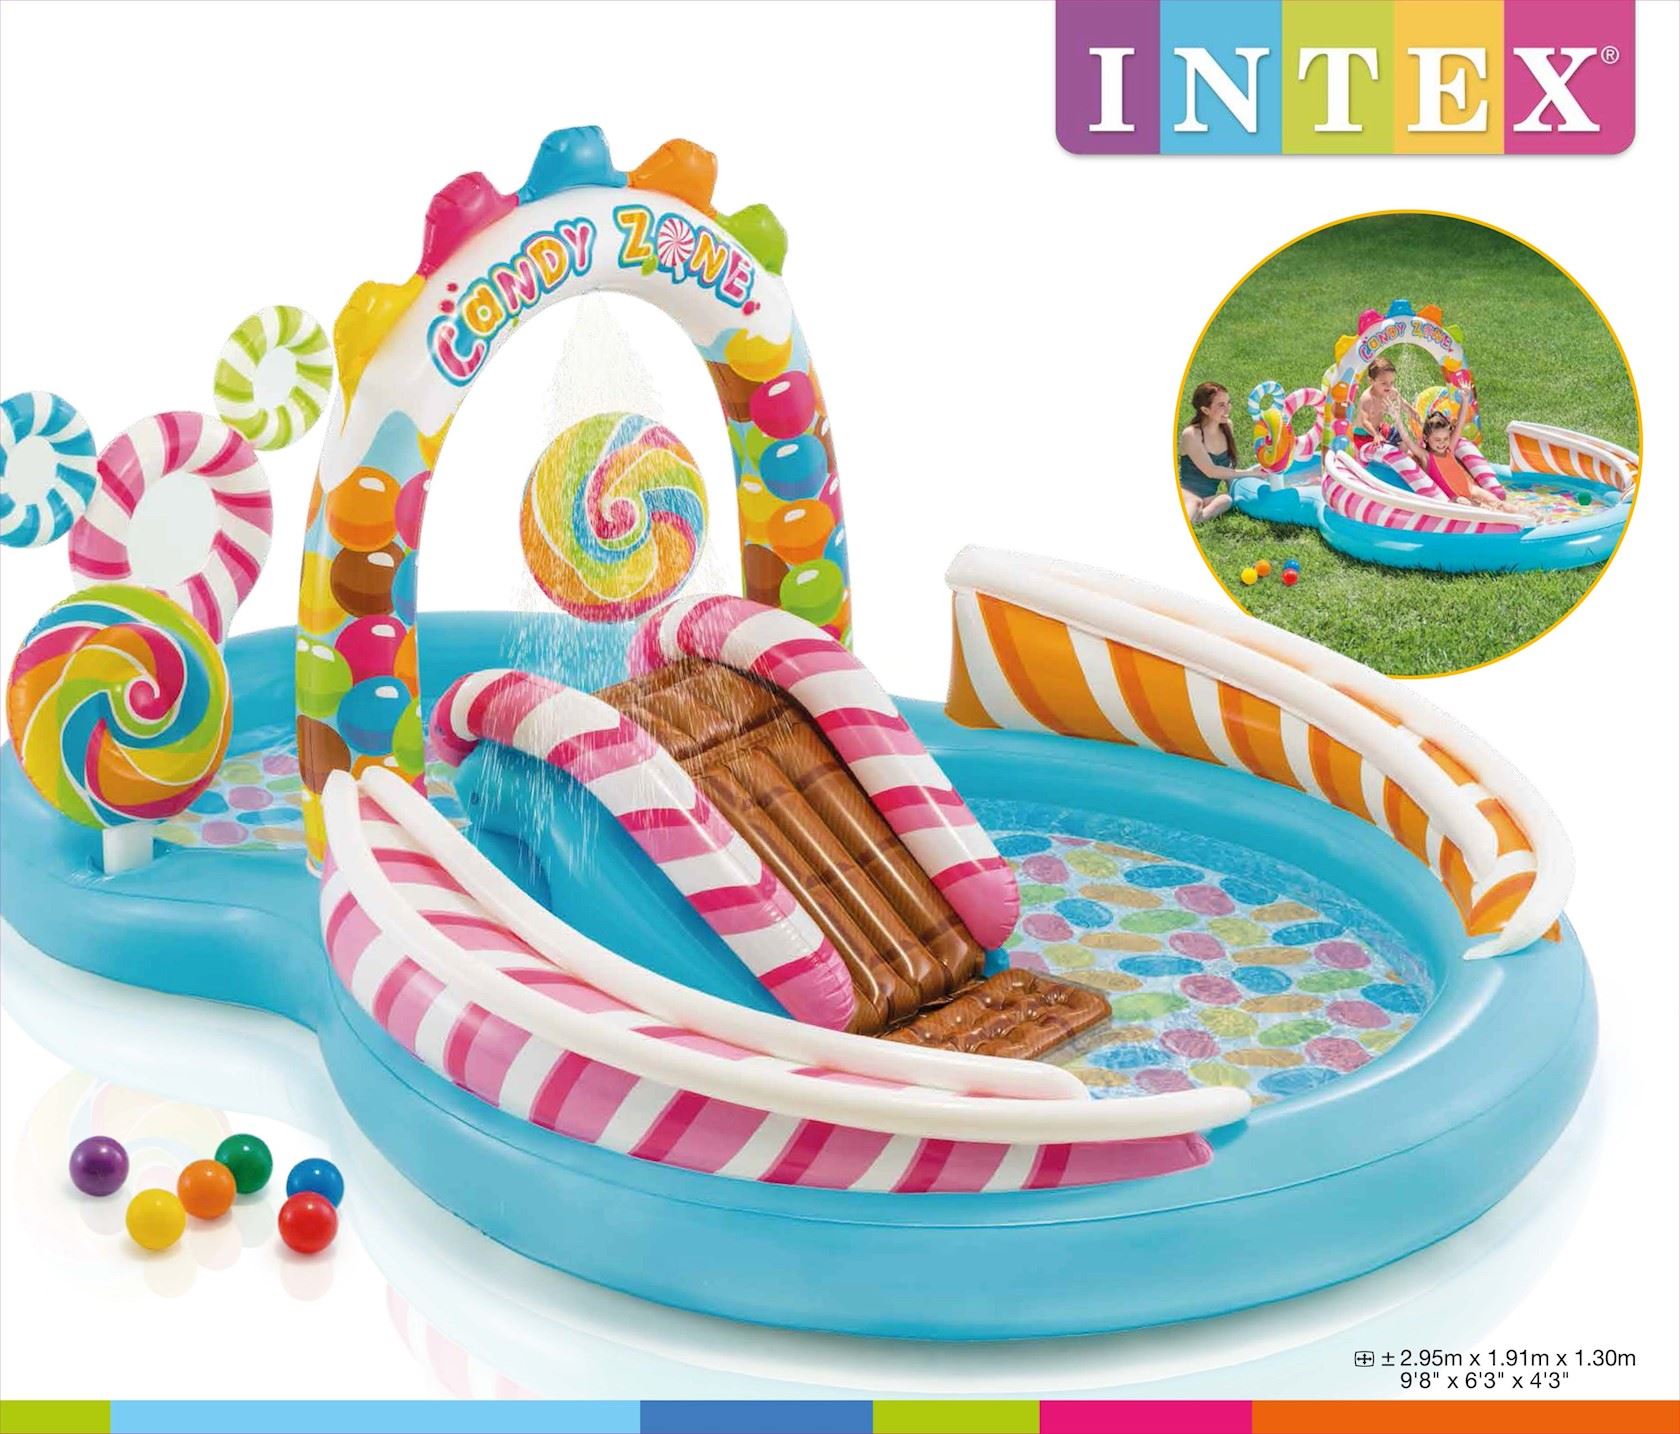 Parc aquatique gonflable Intex Candy Zone - L295 x L191 x H130 cm